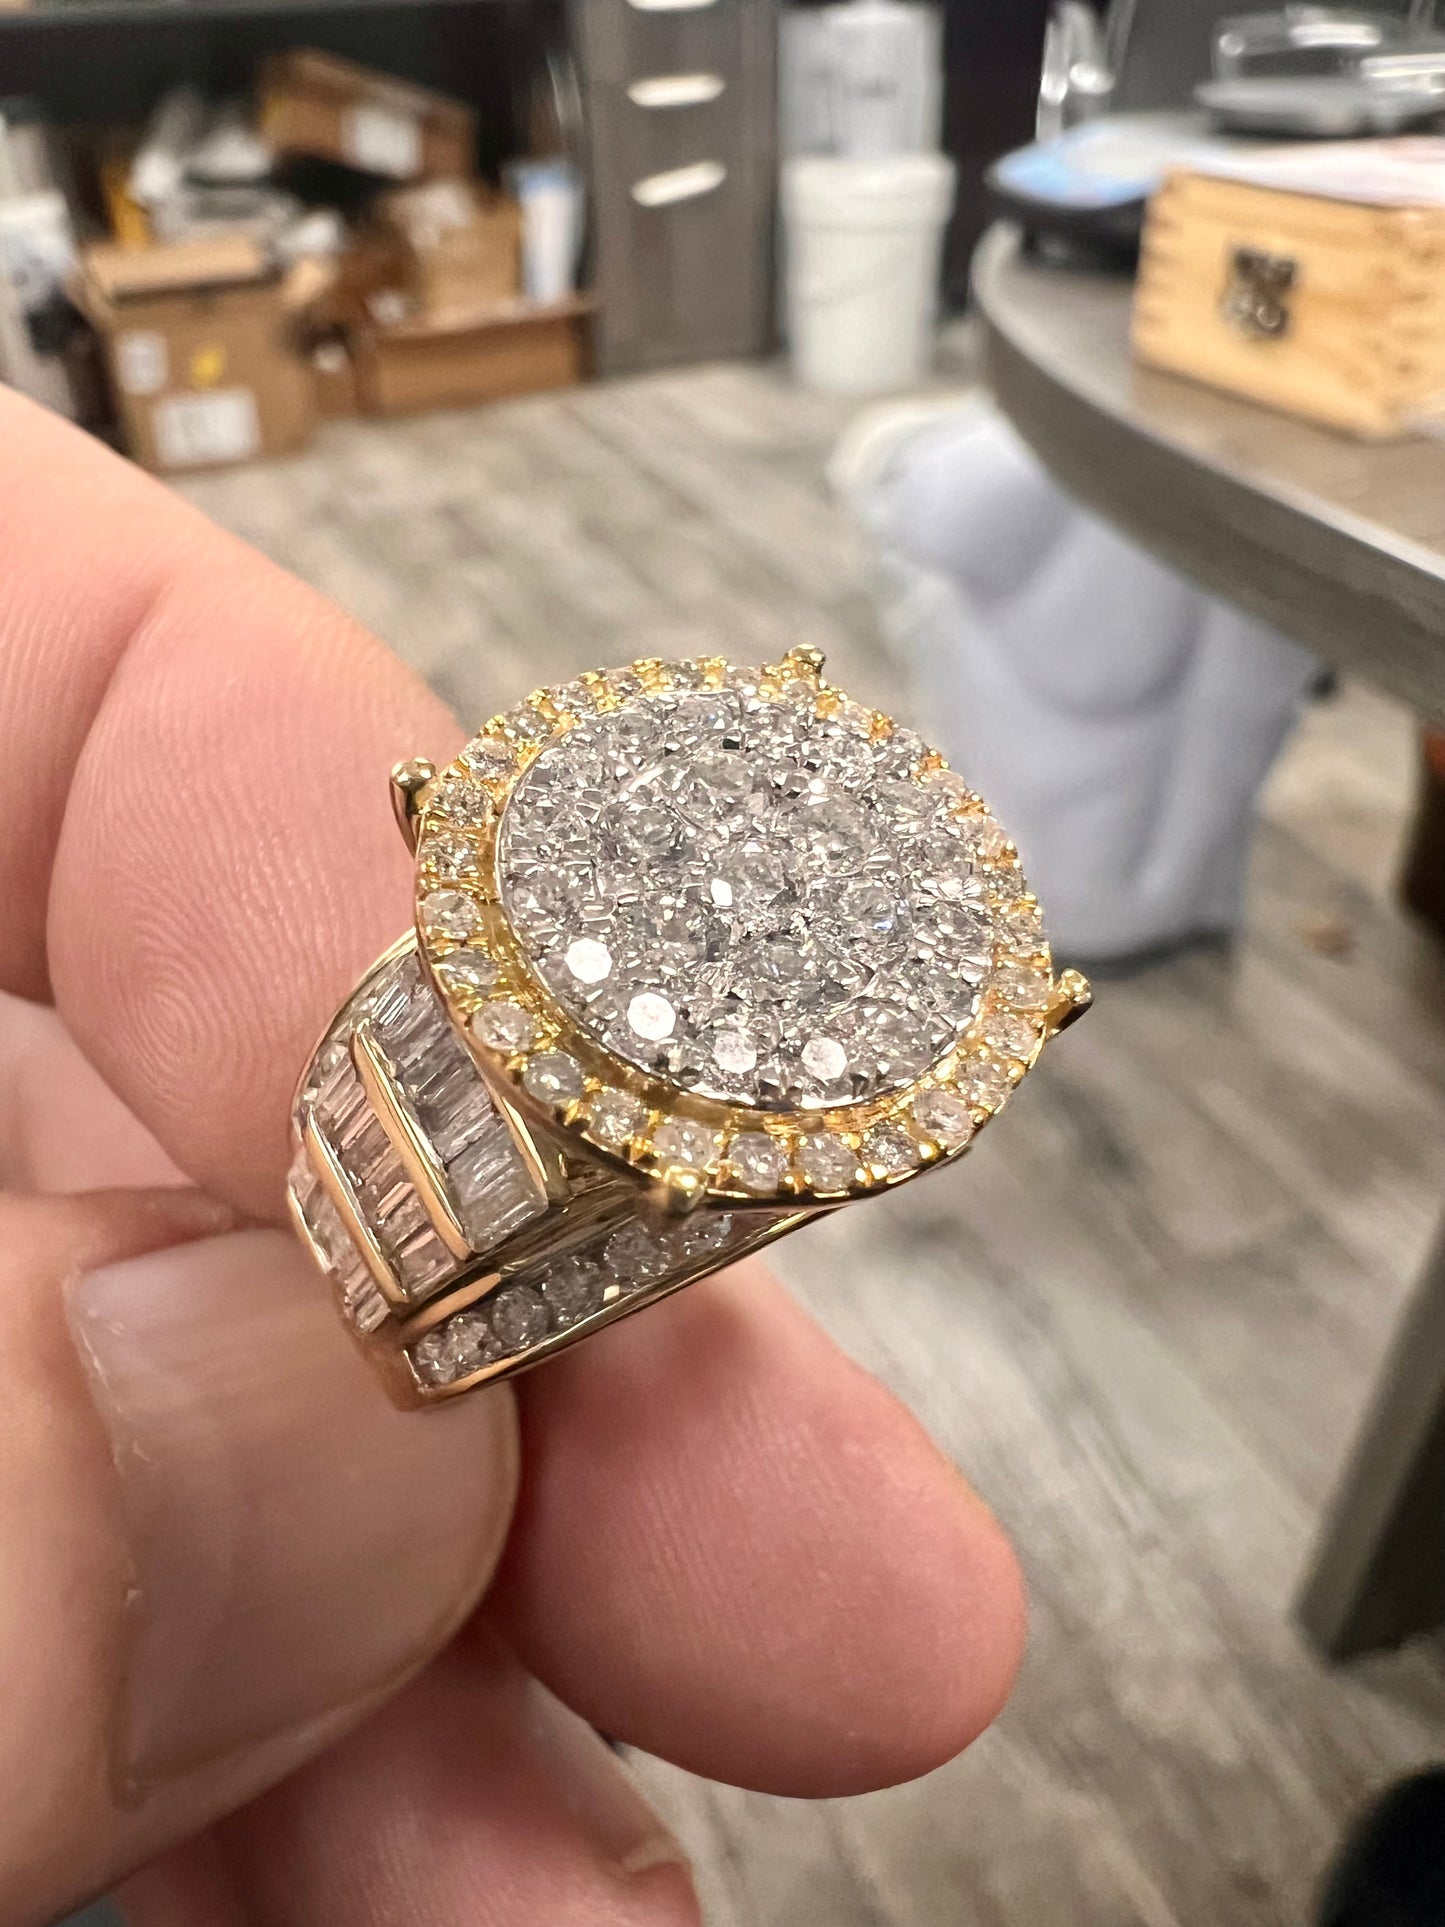 14K Yellow gold natural cluster diamonds princess ring-RG5941Y